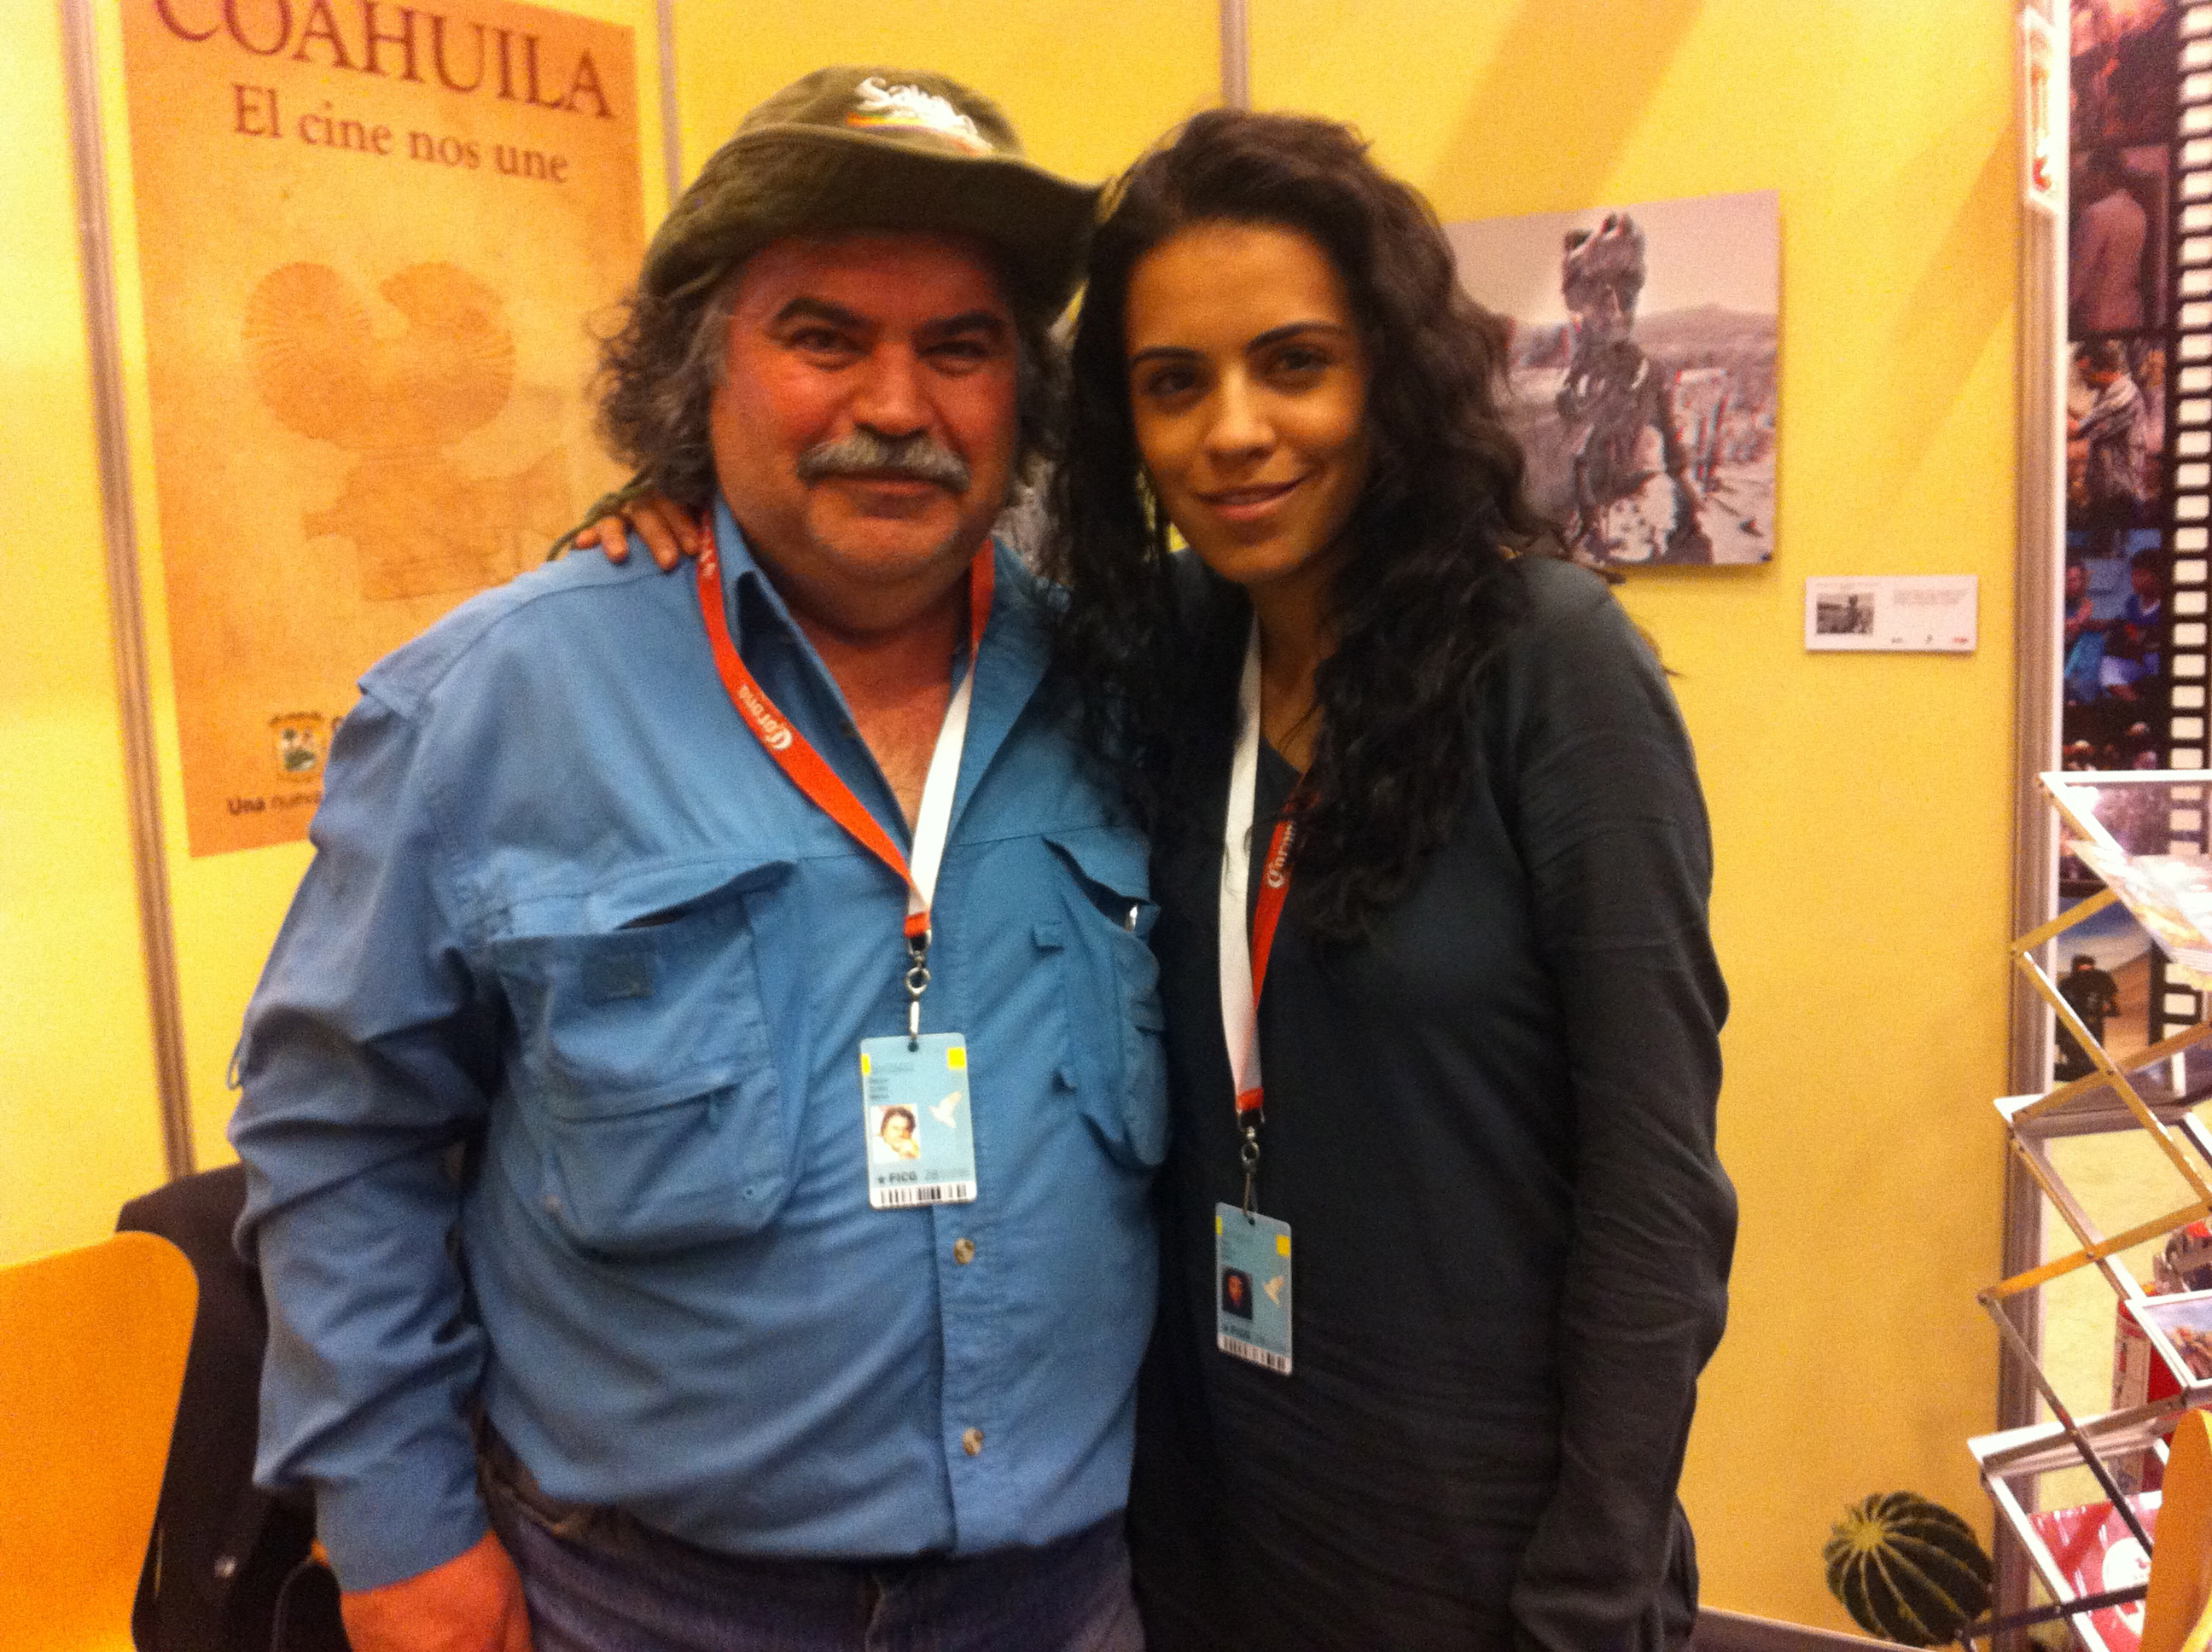 Coahuilan actress Olguita Segura with Sergio E. Avilés at the Guadalajara Film Fest 2013.